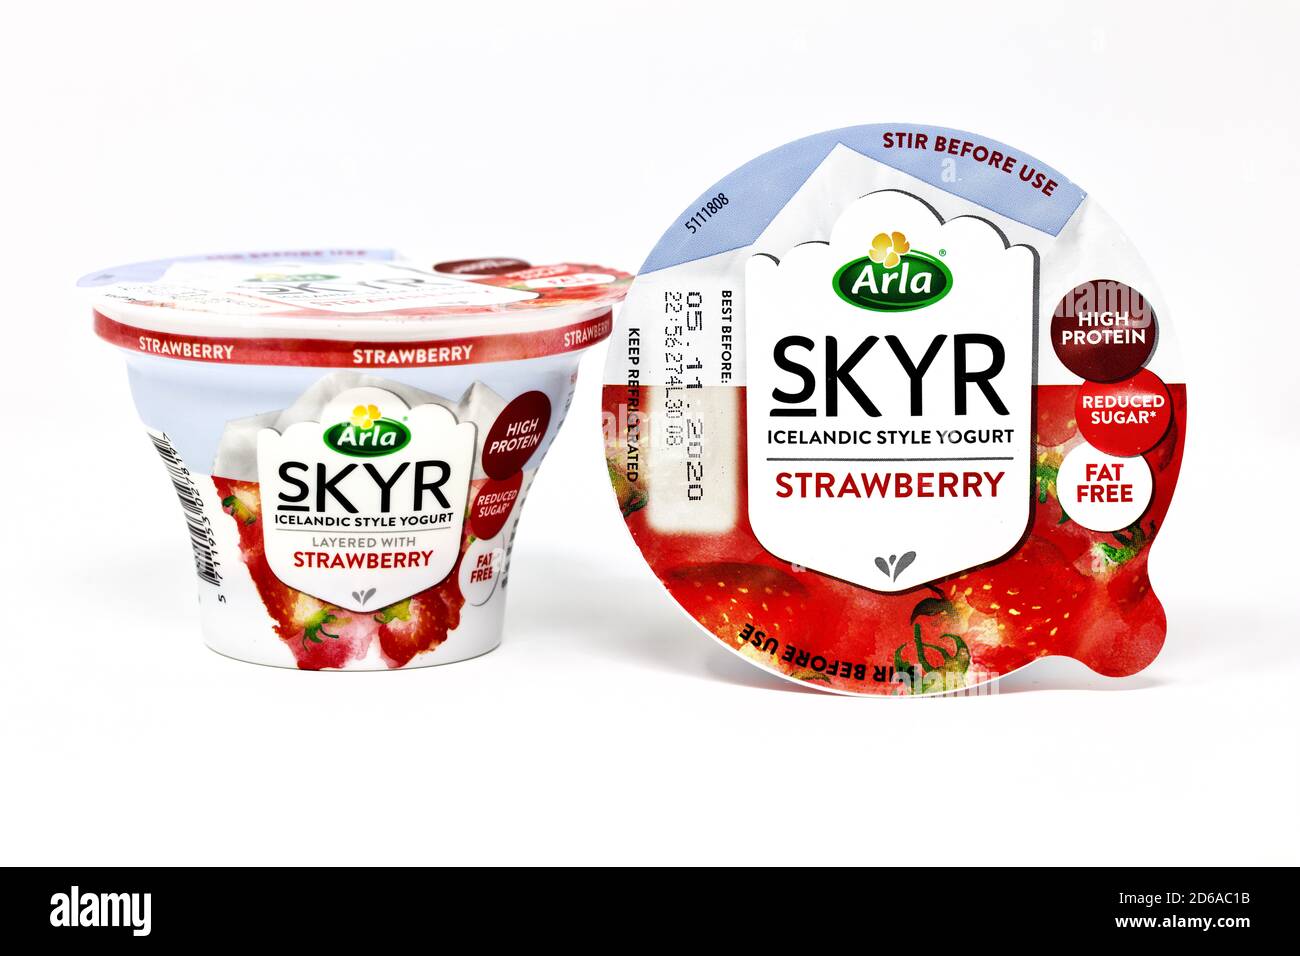 Arla Skyr Strawberry Yogurt Stock Photo - Alamy